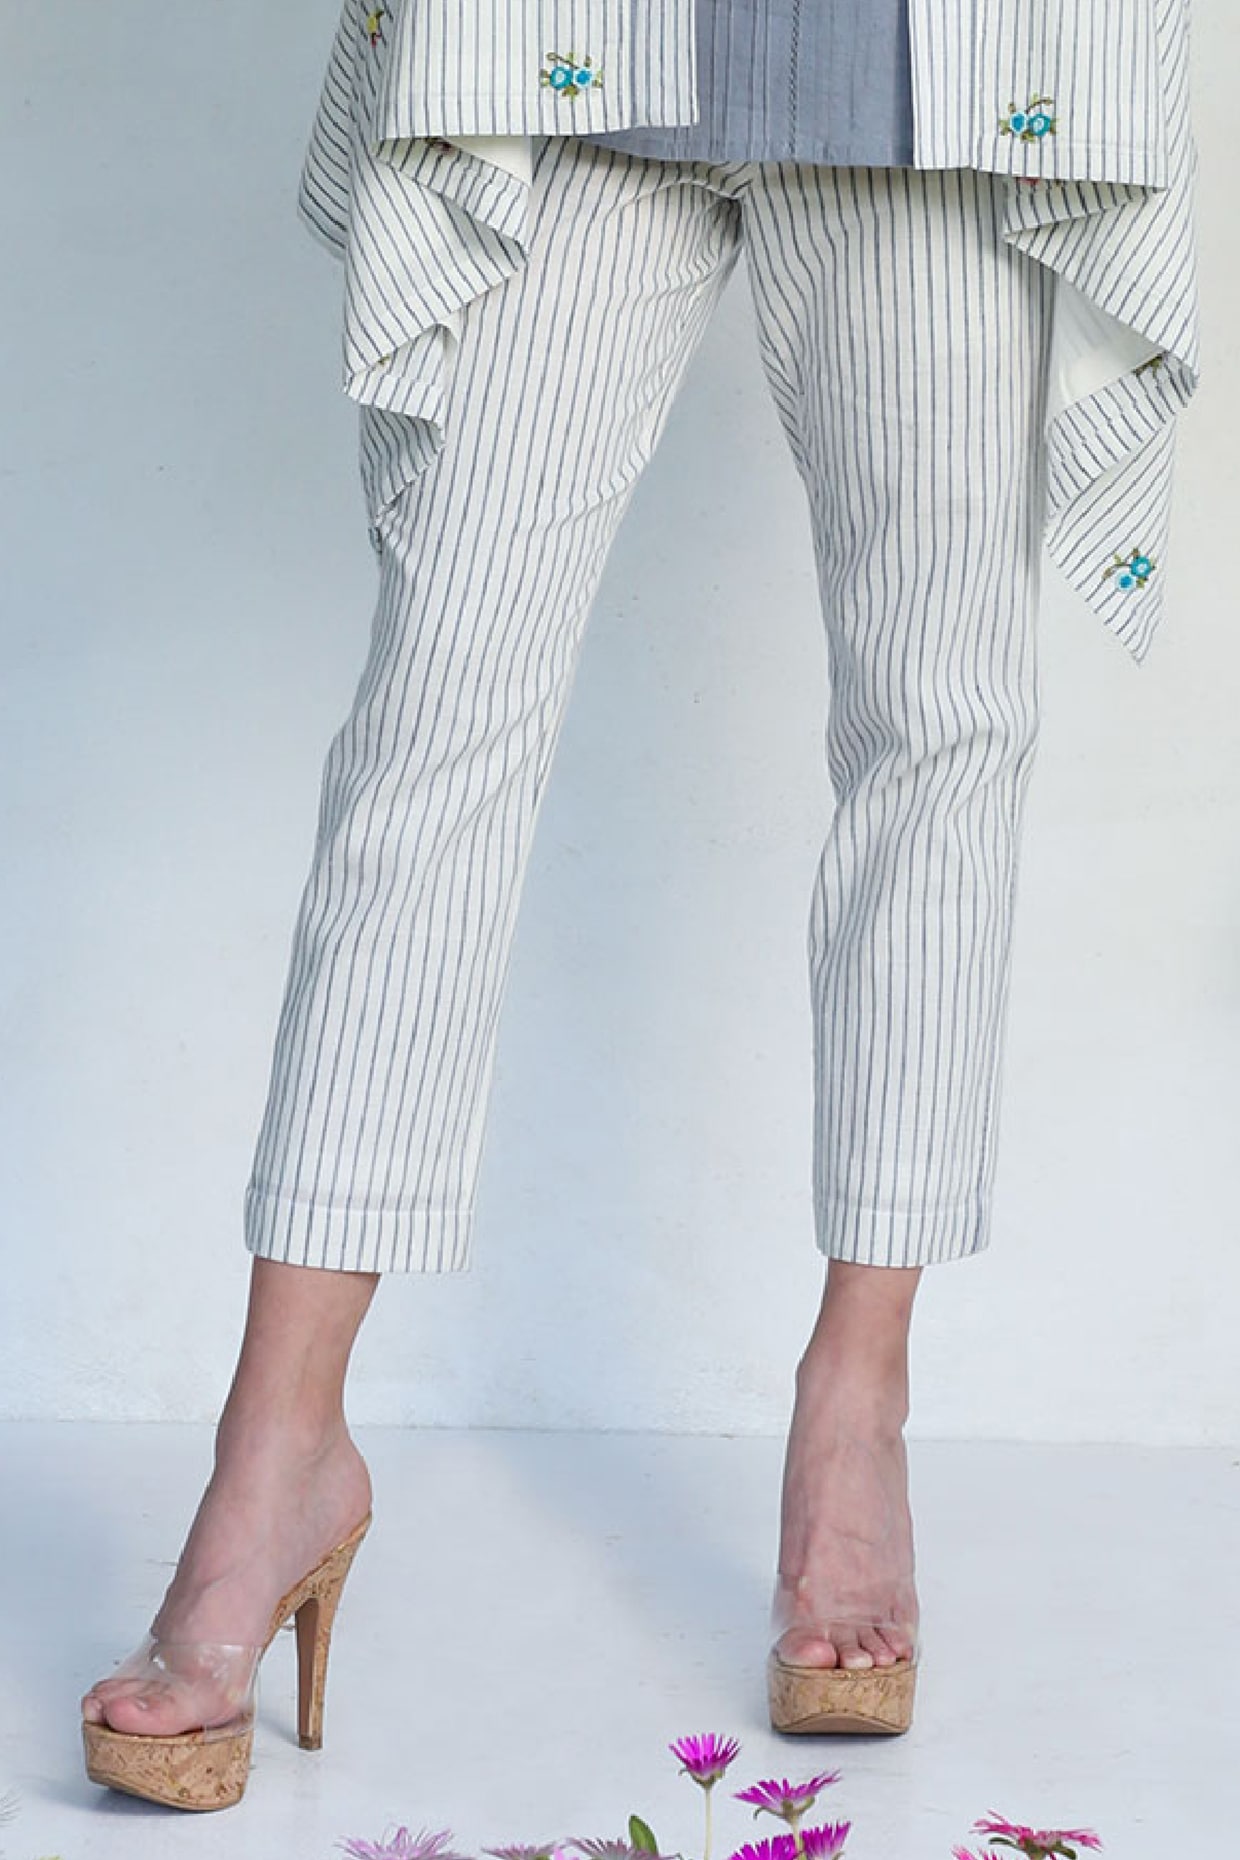 Silk Route Black Dhoti Salwar Tulip Pants Trousers made with Handloom Cotton  | eBay